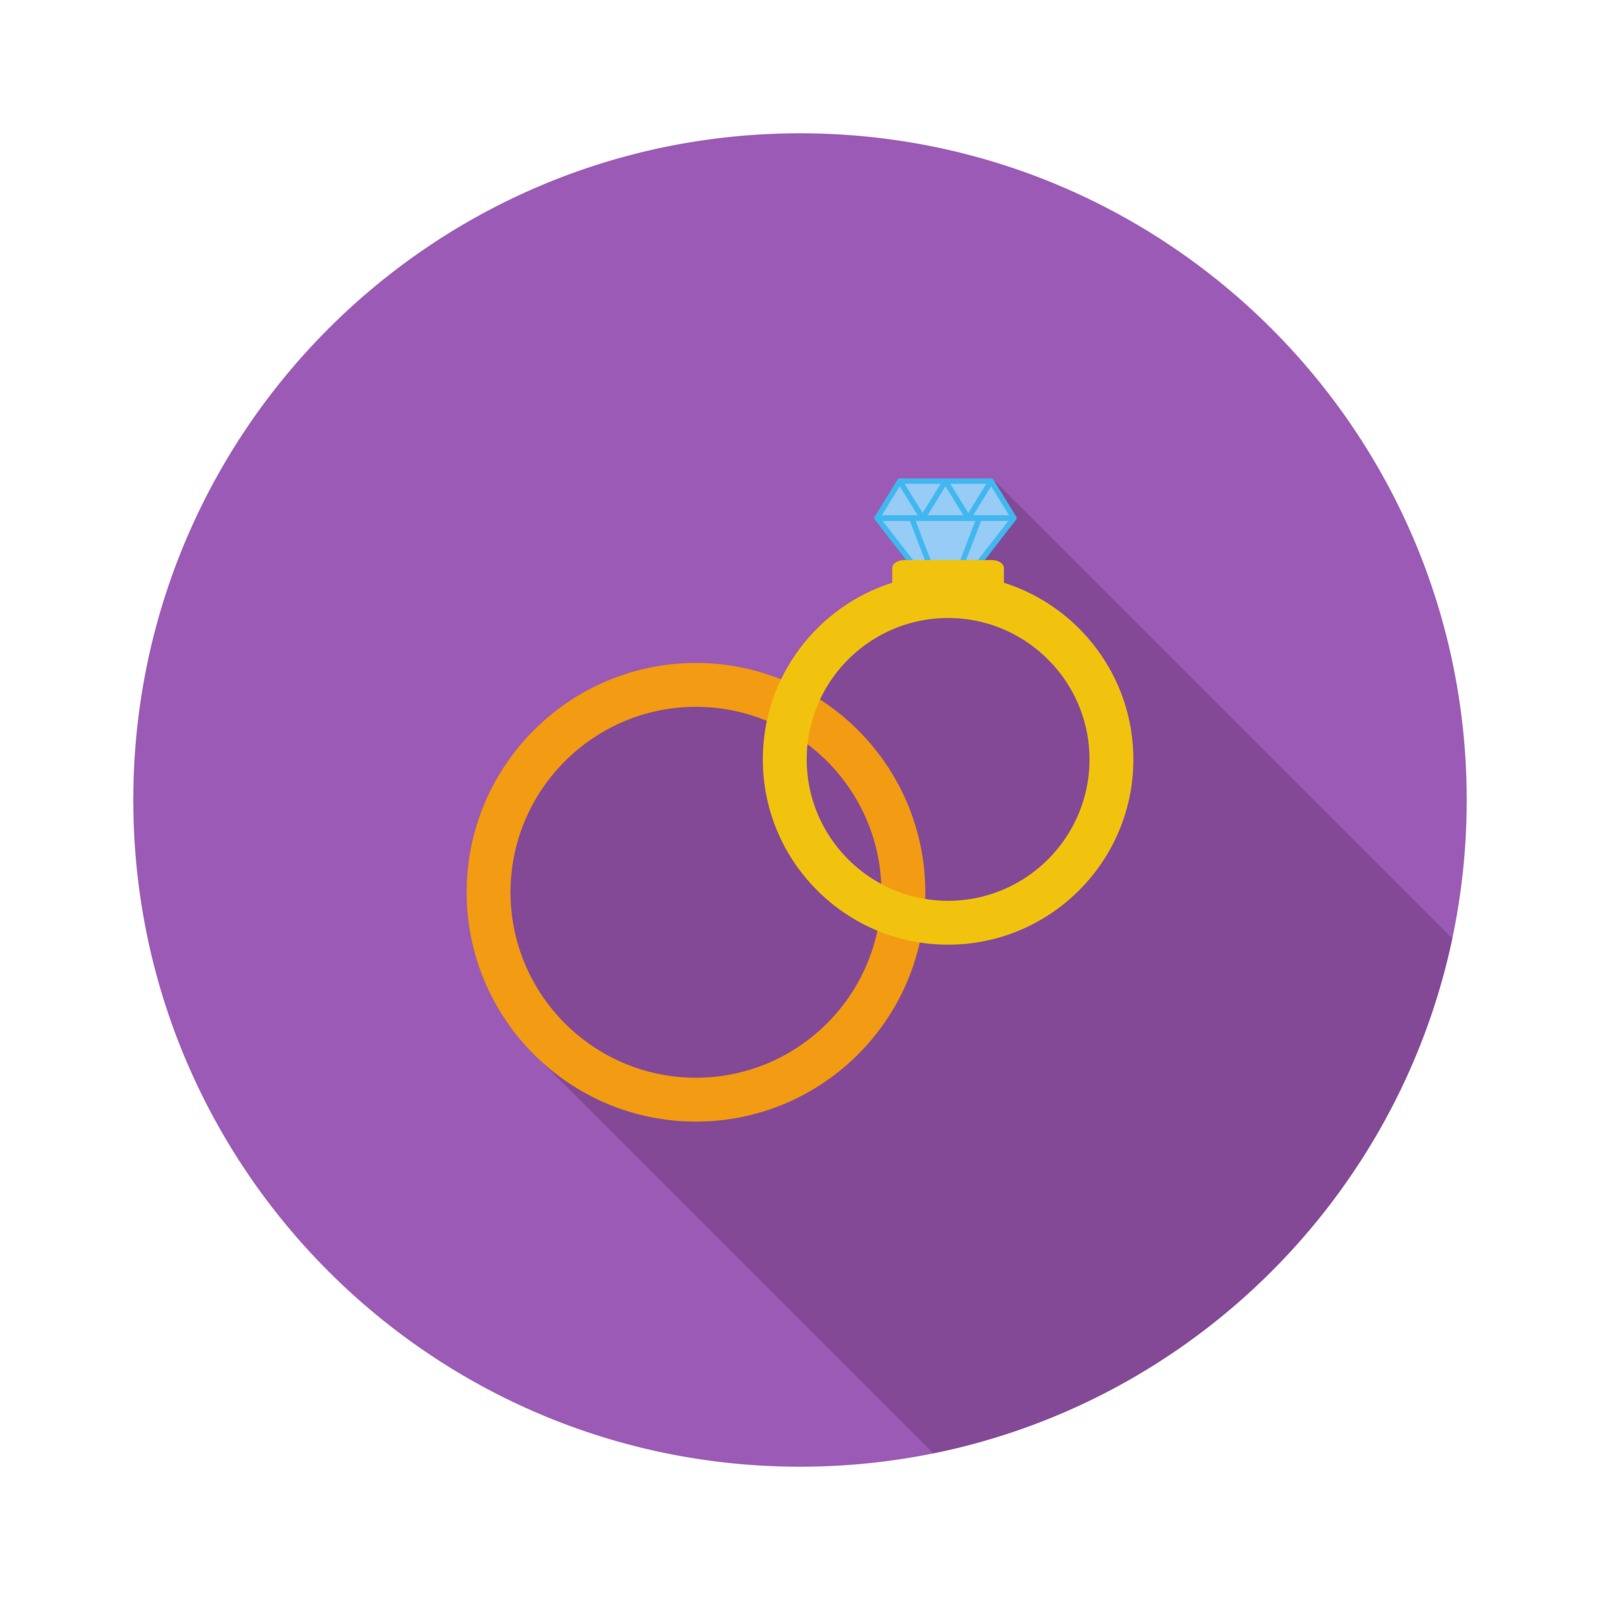 Wedding rings. Single flat color icon. Vector illustration.